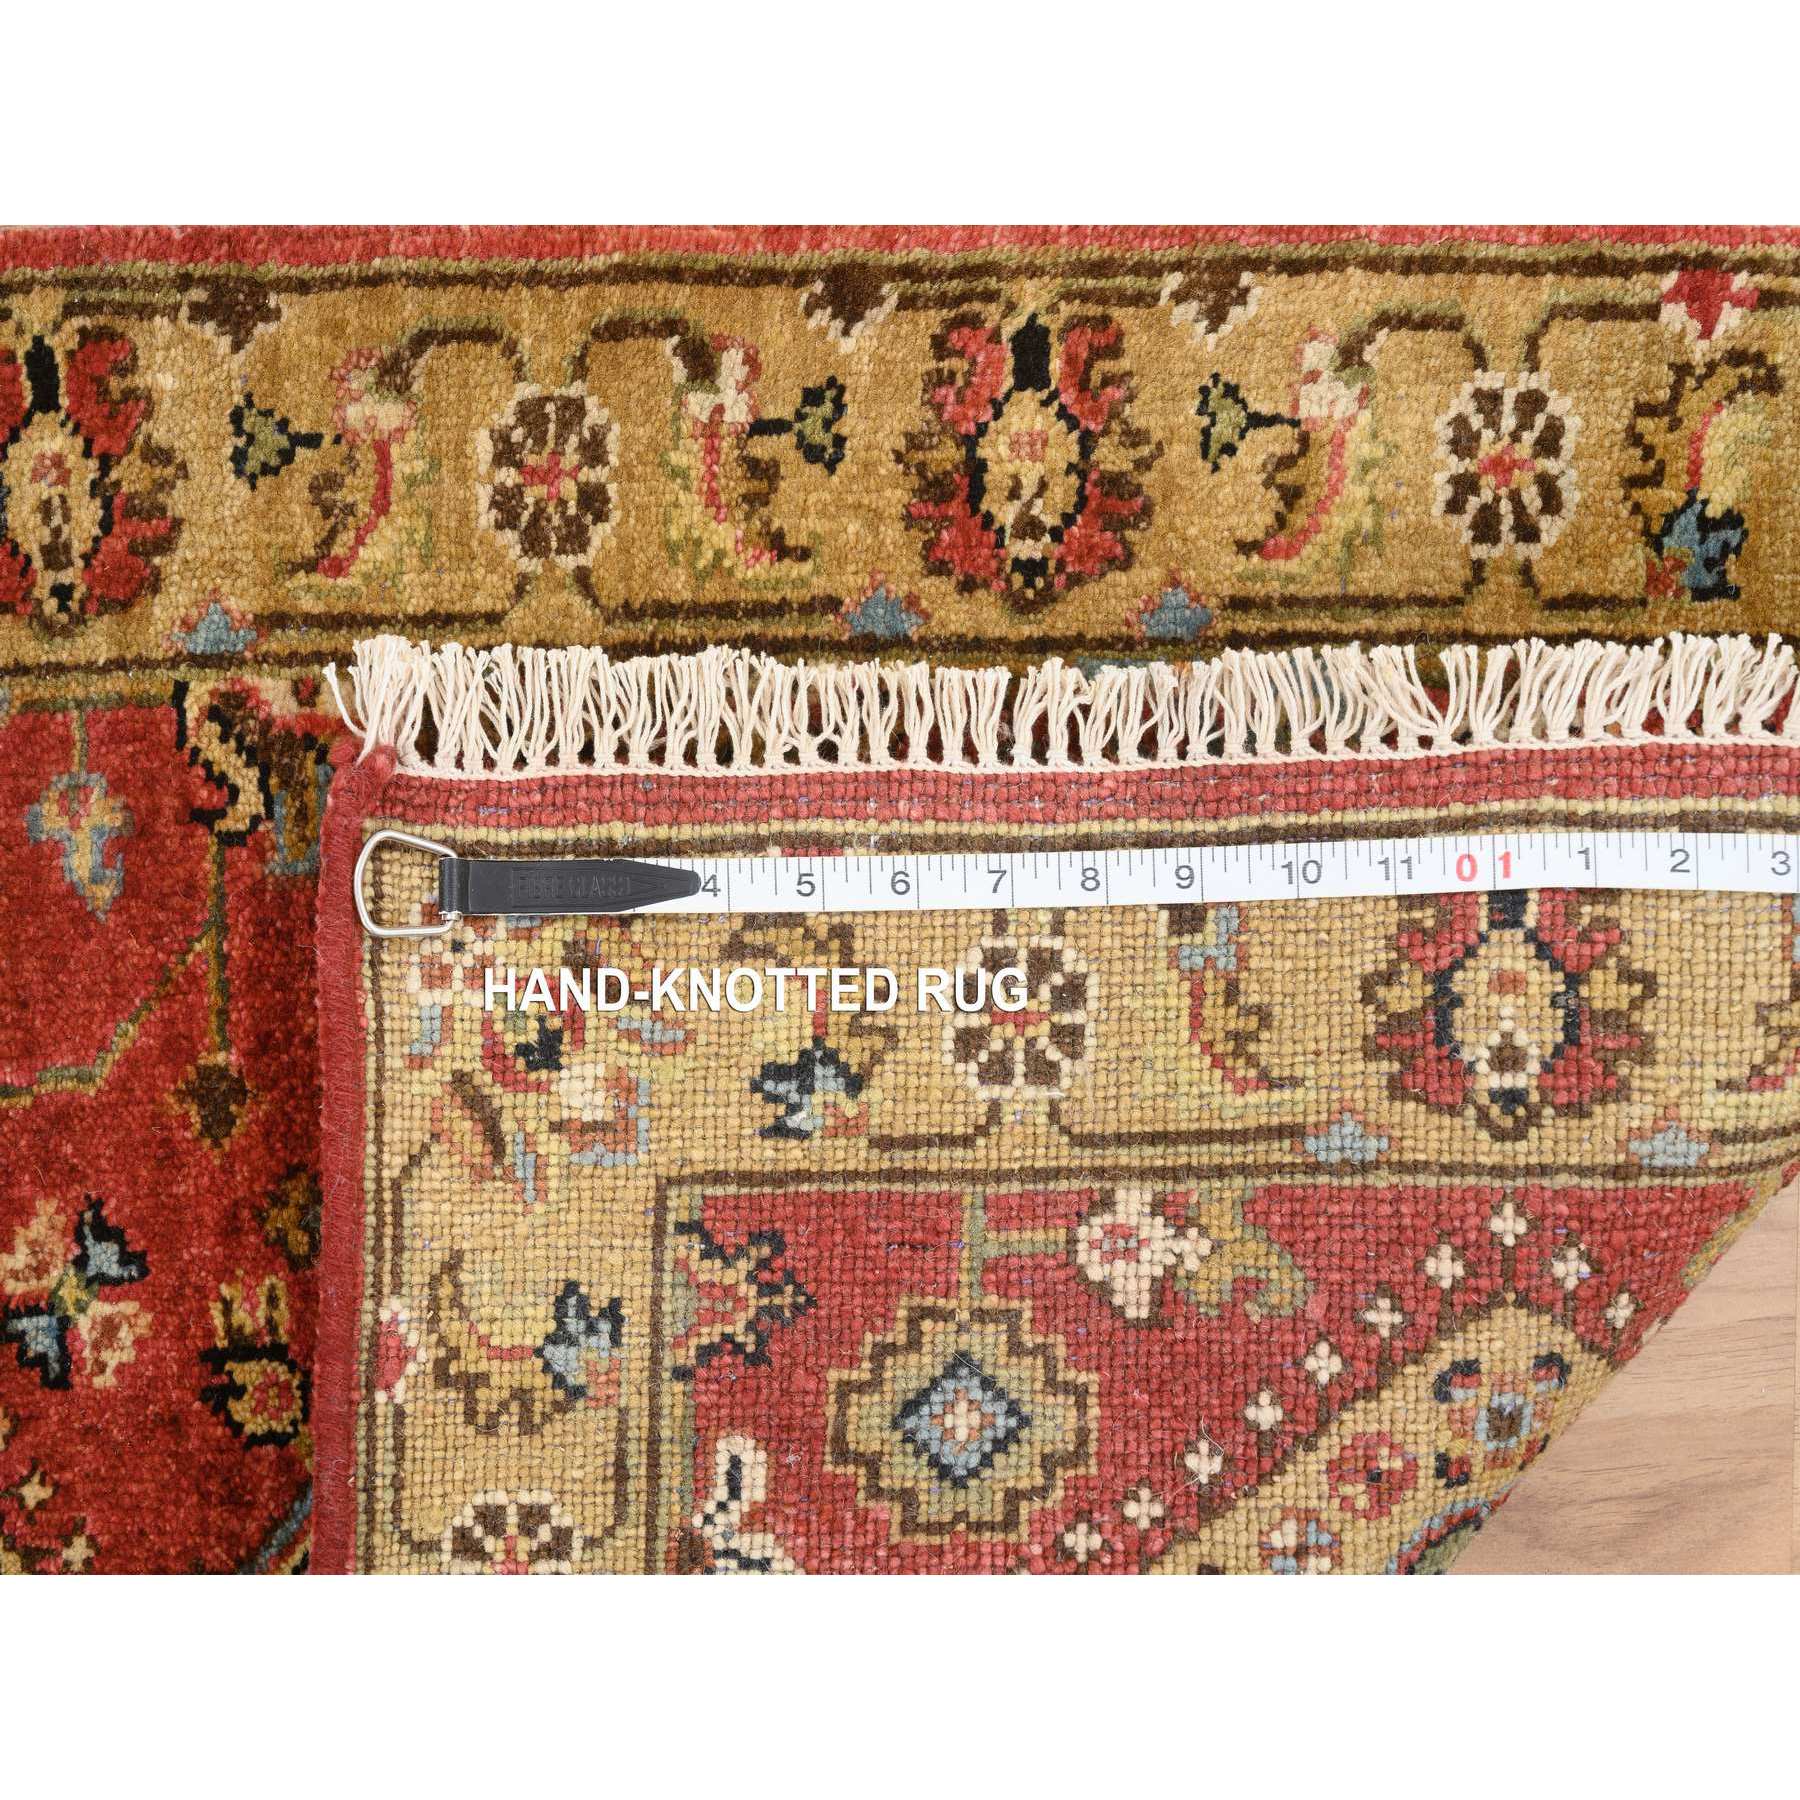 2'1"x3' Red-Gold, Organic Wool, Hand Woven, Karajeh Design with Geometric Medallions, Oriental Rug 